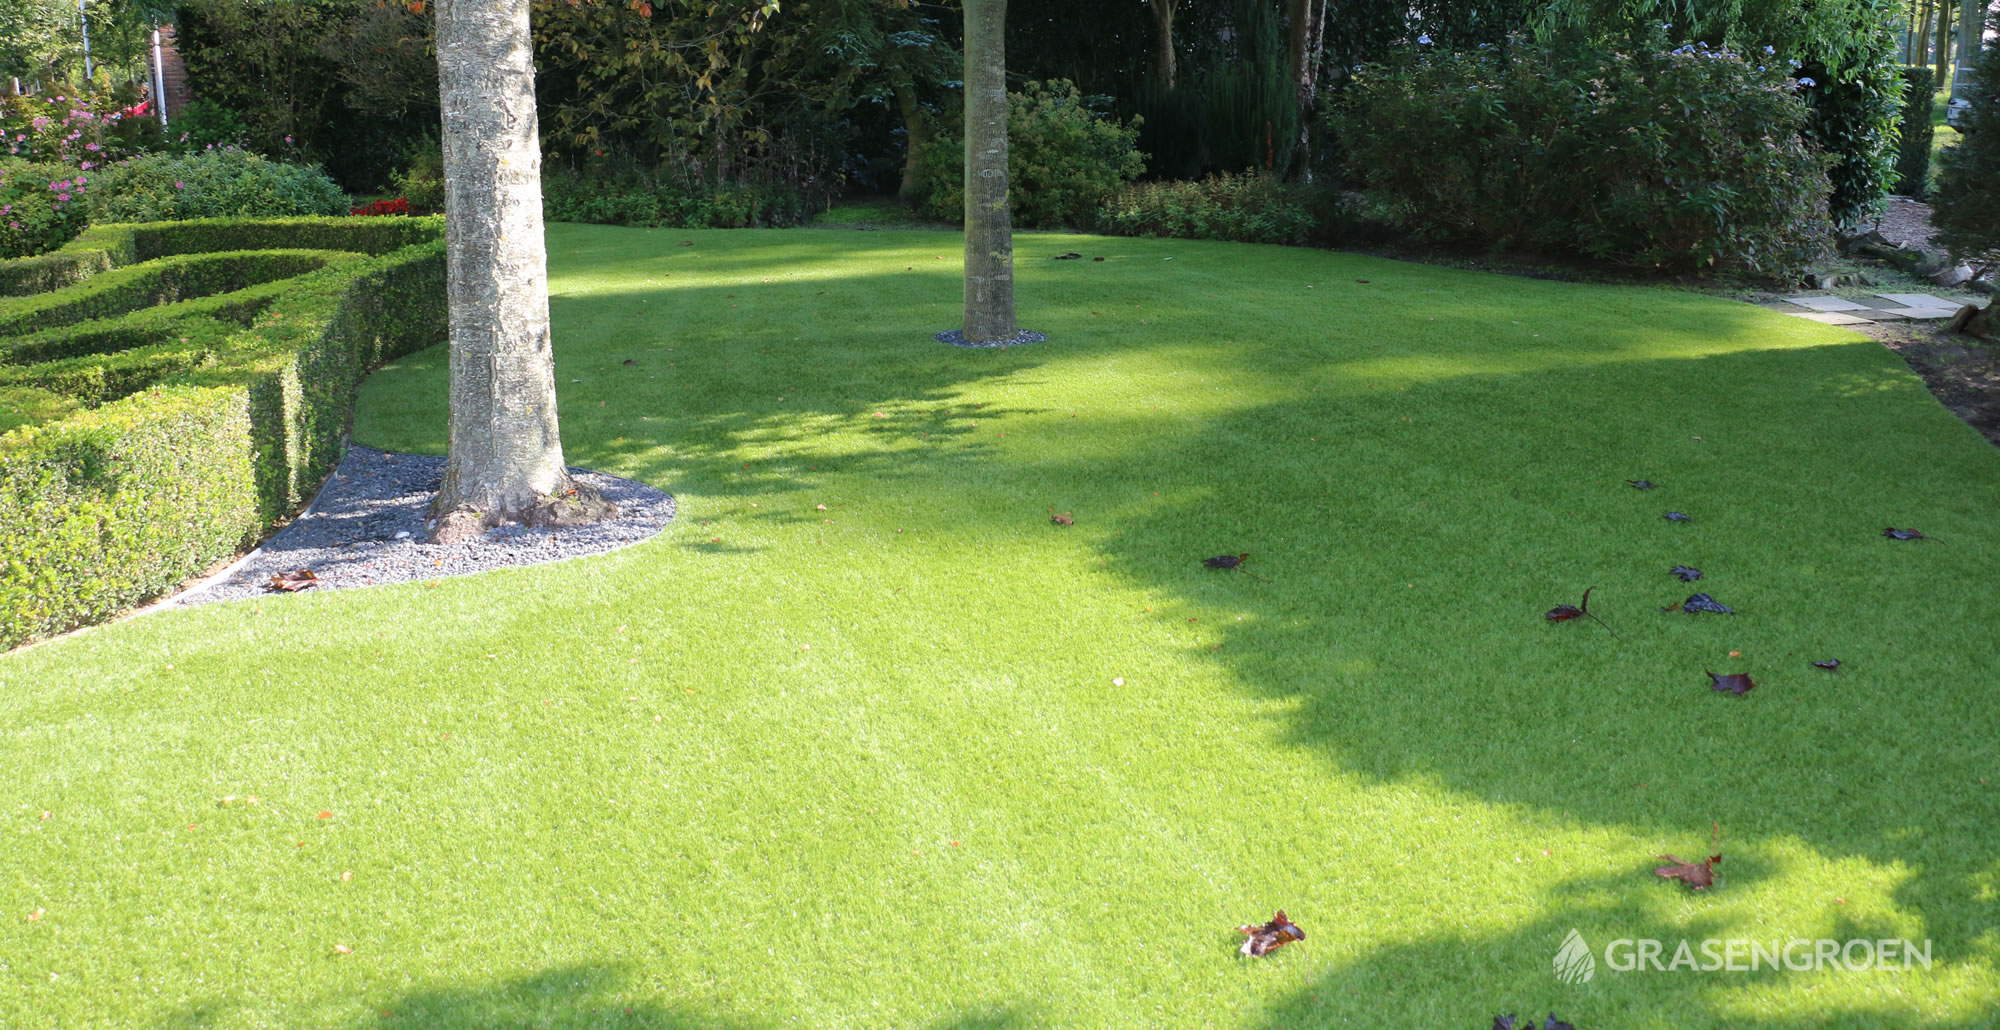 Kunstgrasleggensintoedenrode17 • Gras en Groen website